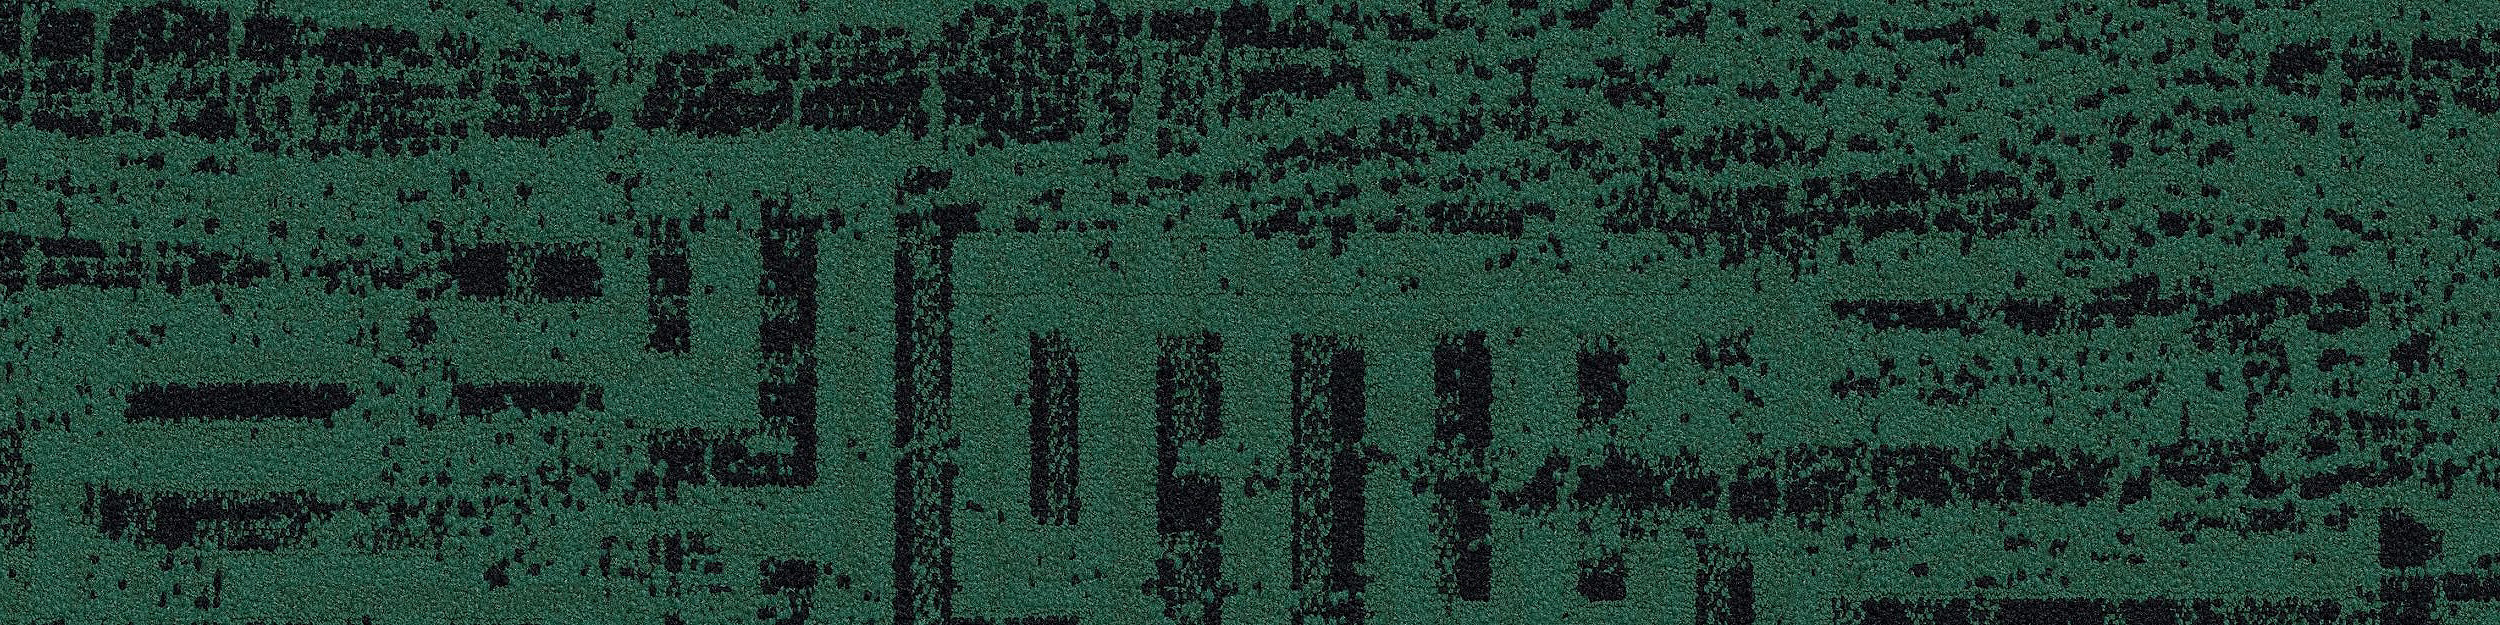 PM27 Carpet Tile In Malachite image number 3